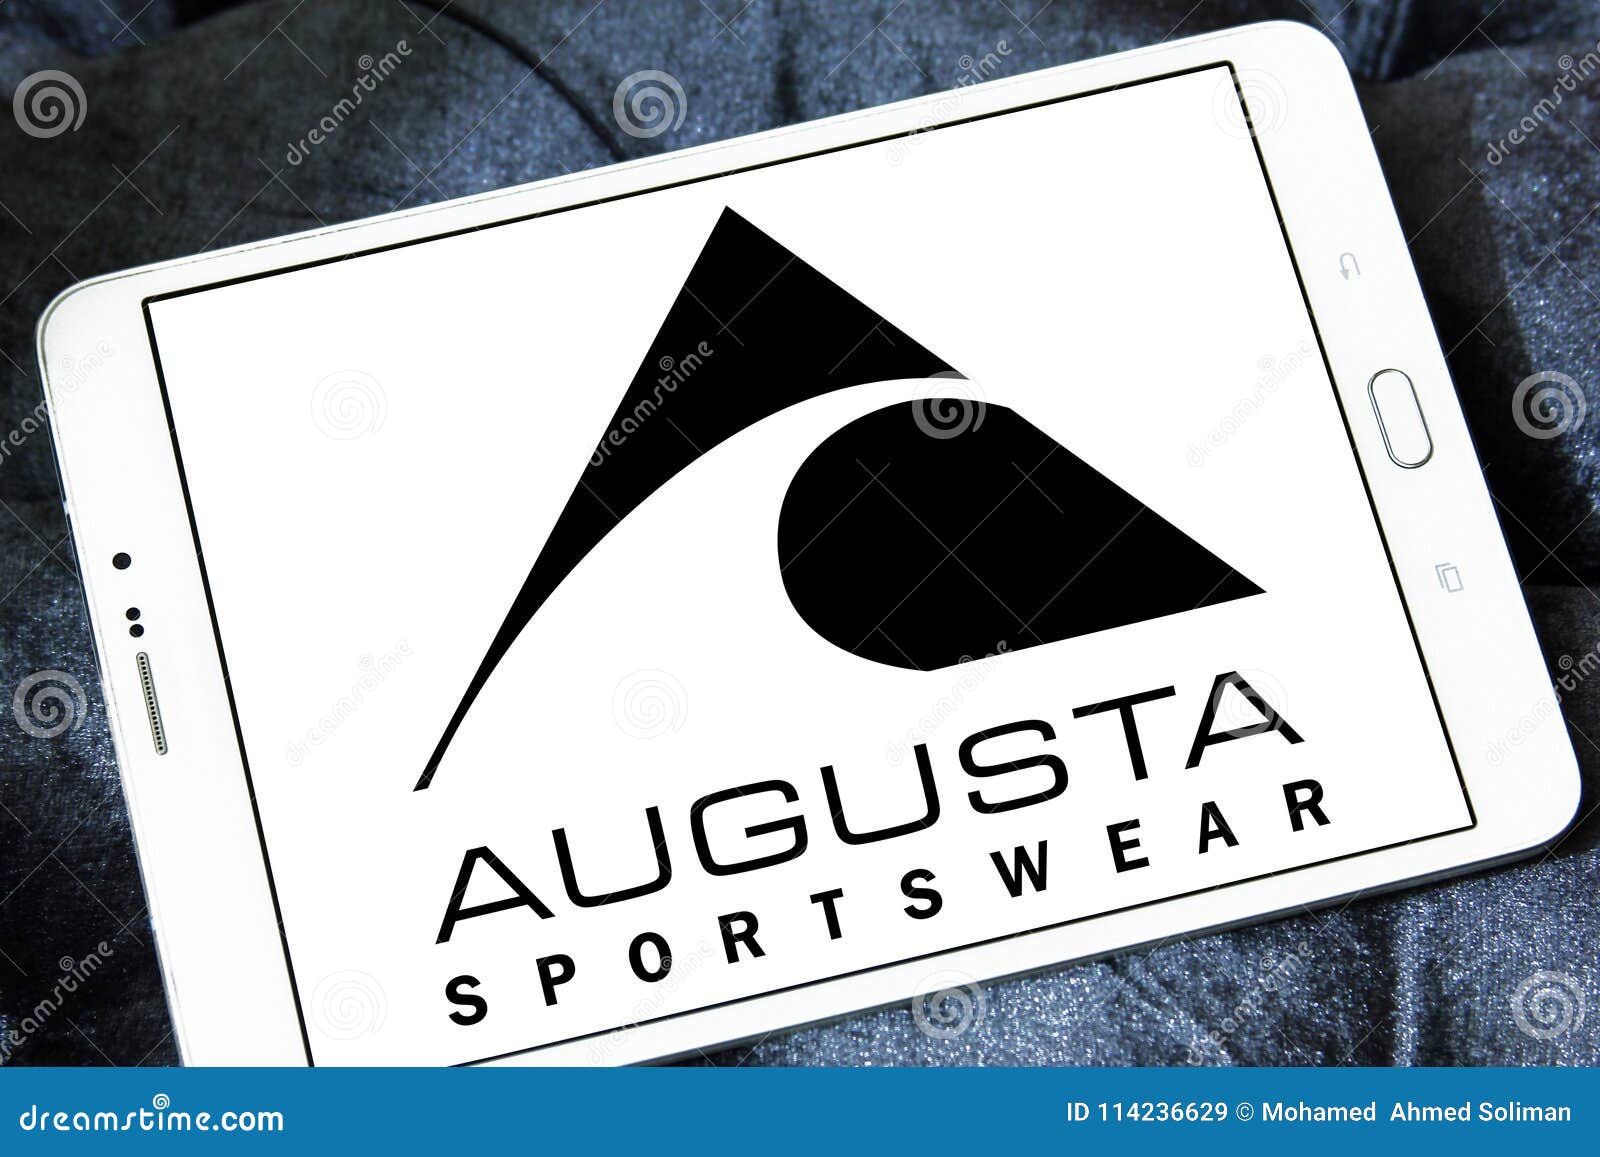 Augusta Sportswear Brand Logo Editorial Stock Image - Image of